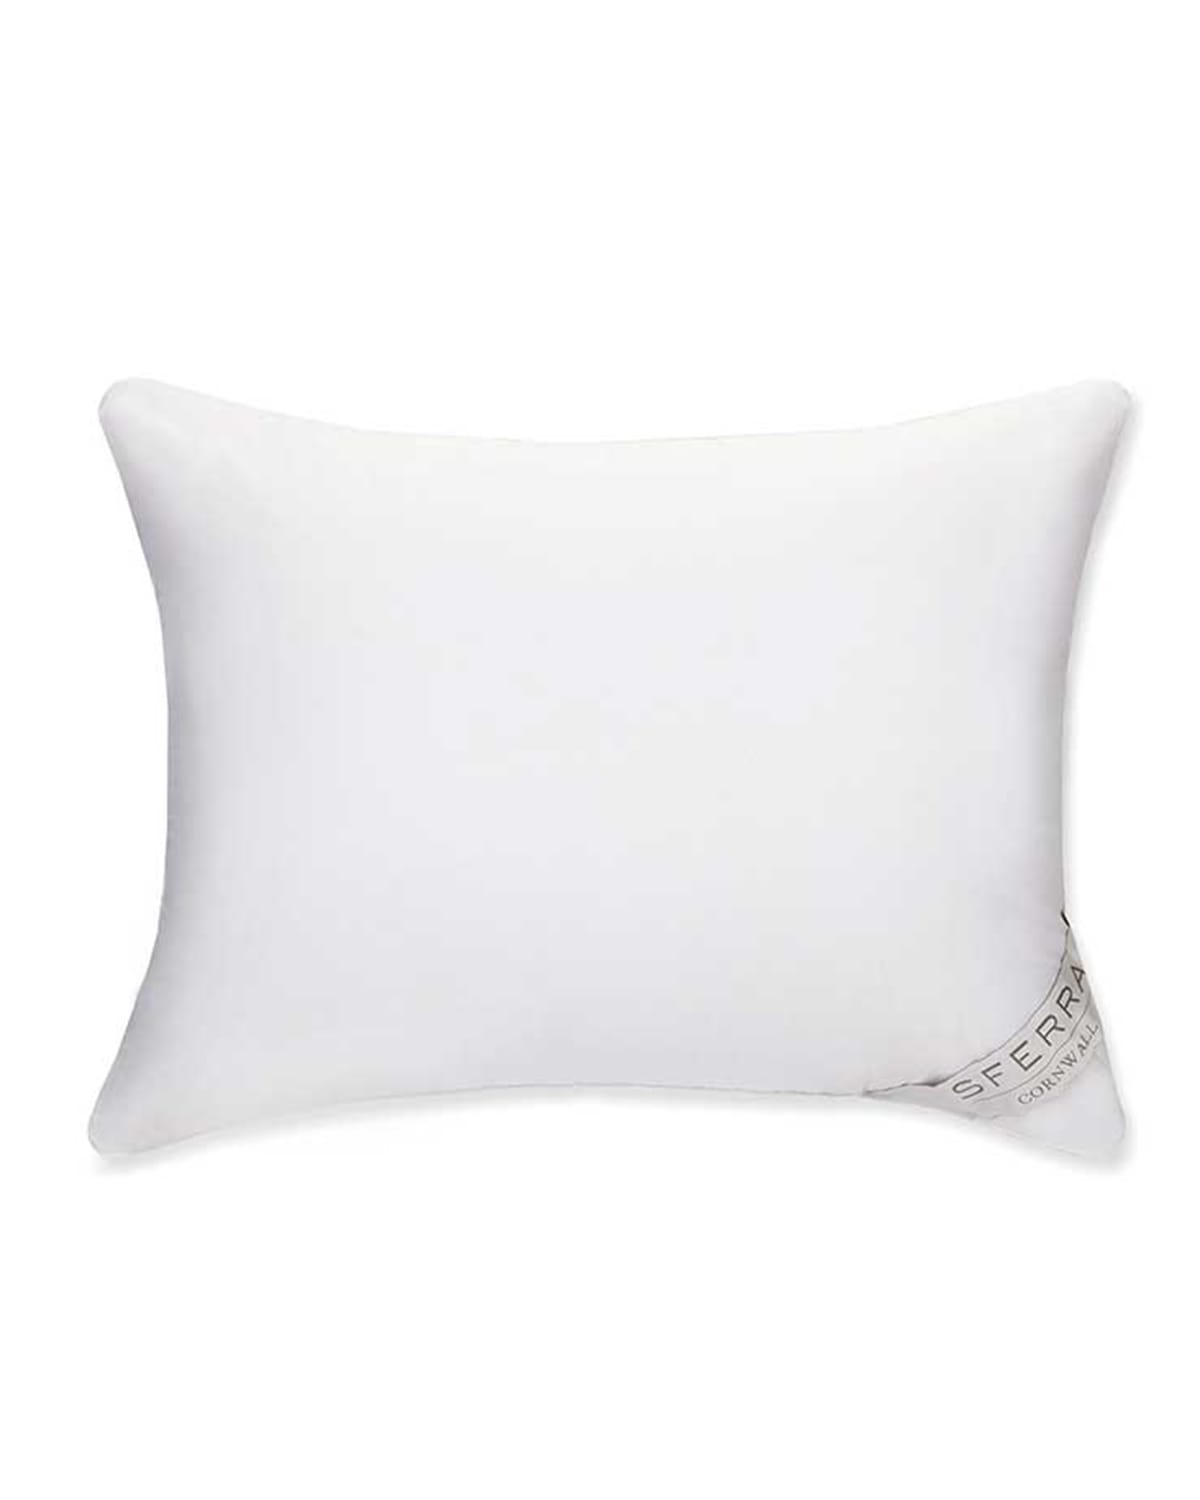 Sferra Cornwall Firm Down Pillow, Queen In White